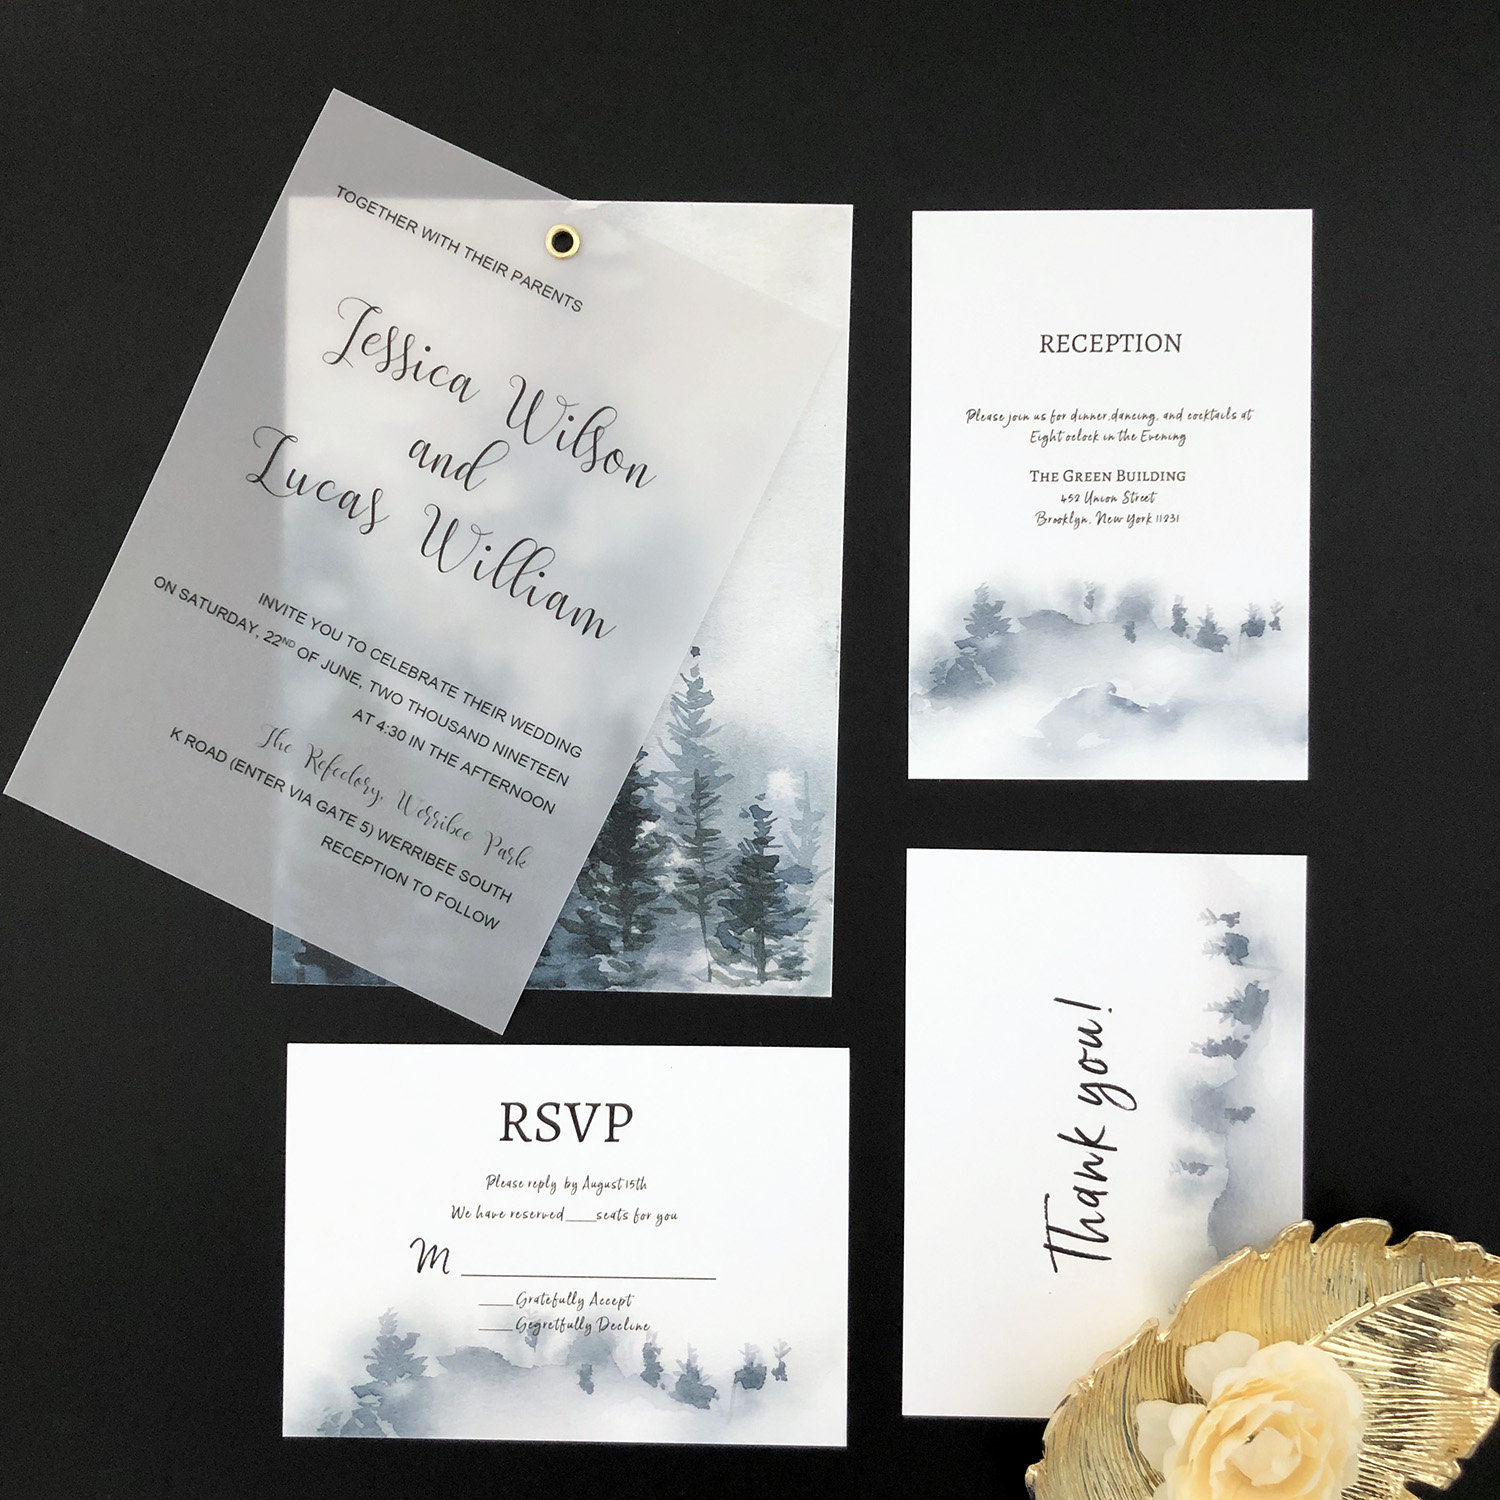 Vellum Paper Wedding Invitations With Kraft Paper and Burlap-free